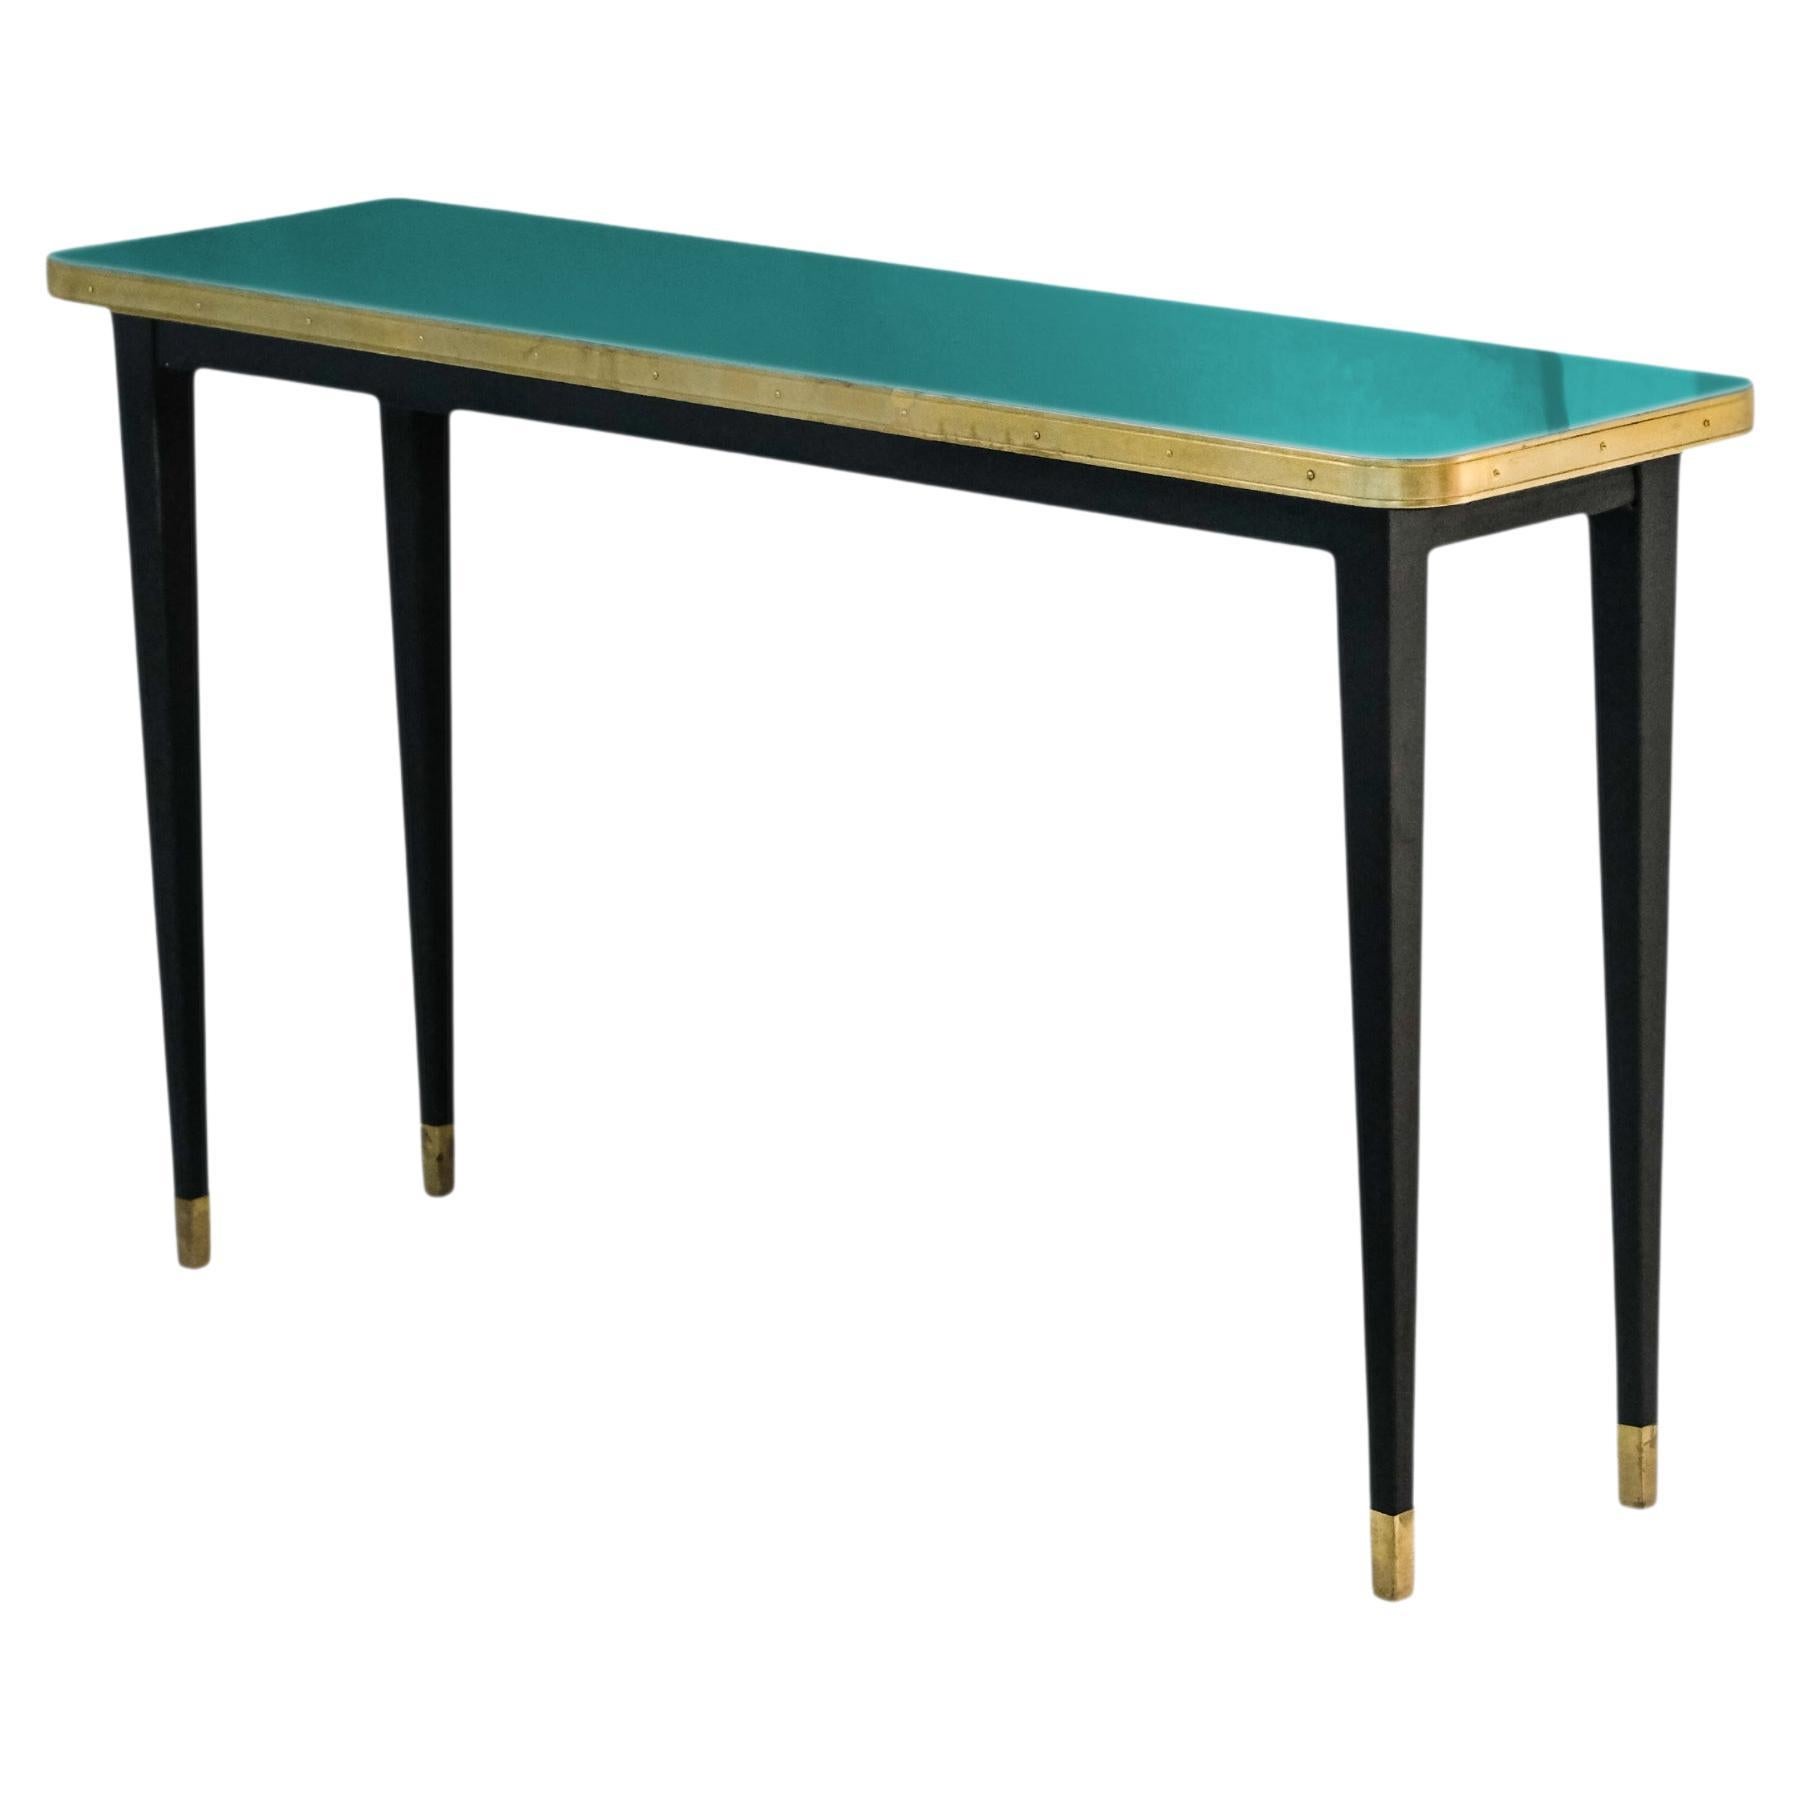 Console Table, High Gloss Laminate & Brass Details, Maui Green - M